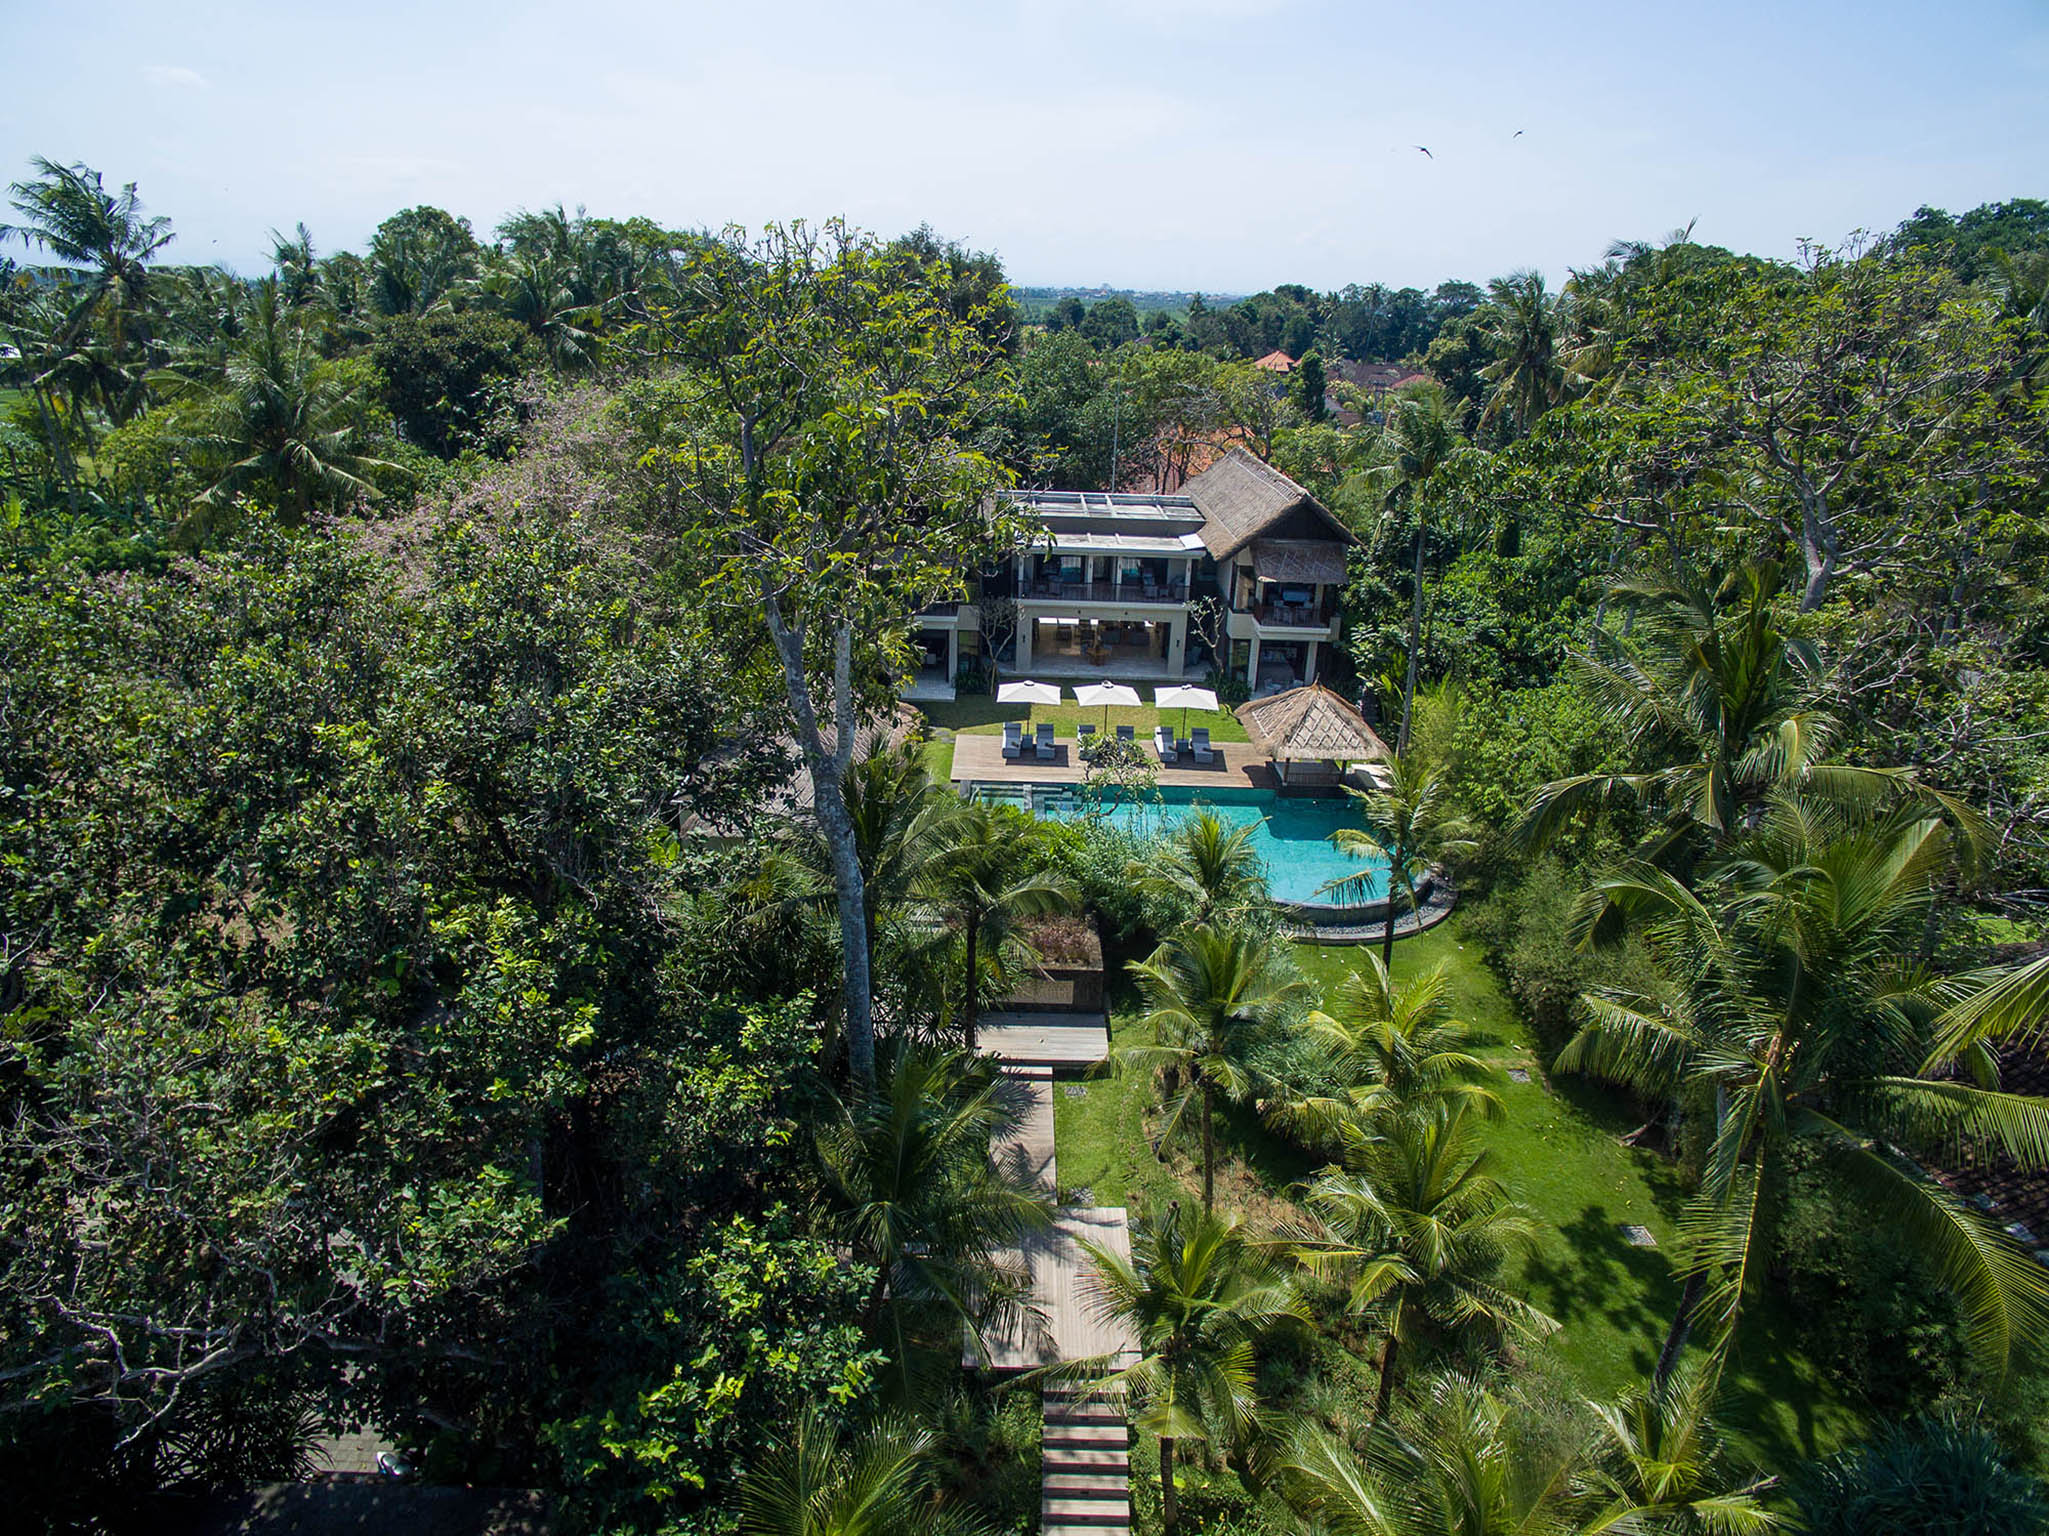 Seseh Beach Villa II - The villa and gardens from above - Seseh Beach Villa II, Seseh-Tanah Lot, Bali